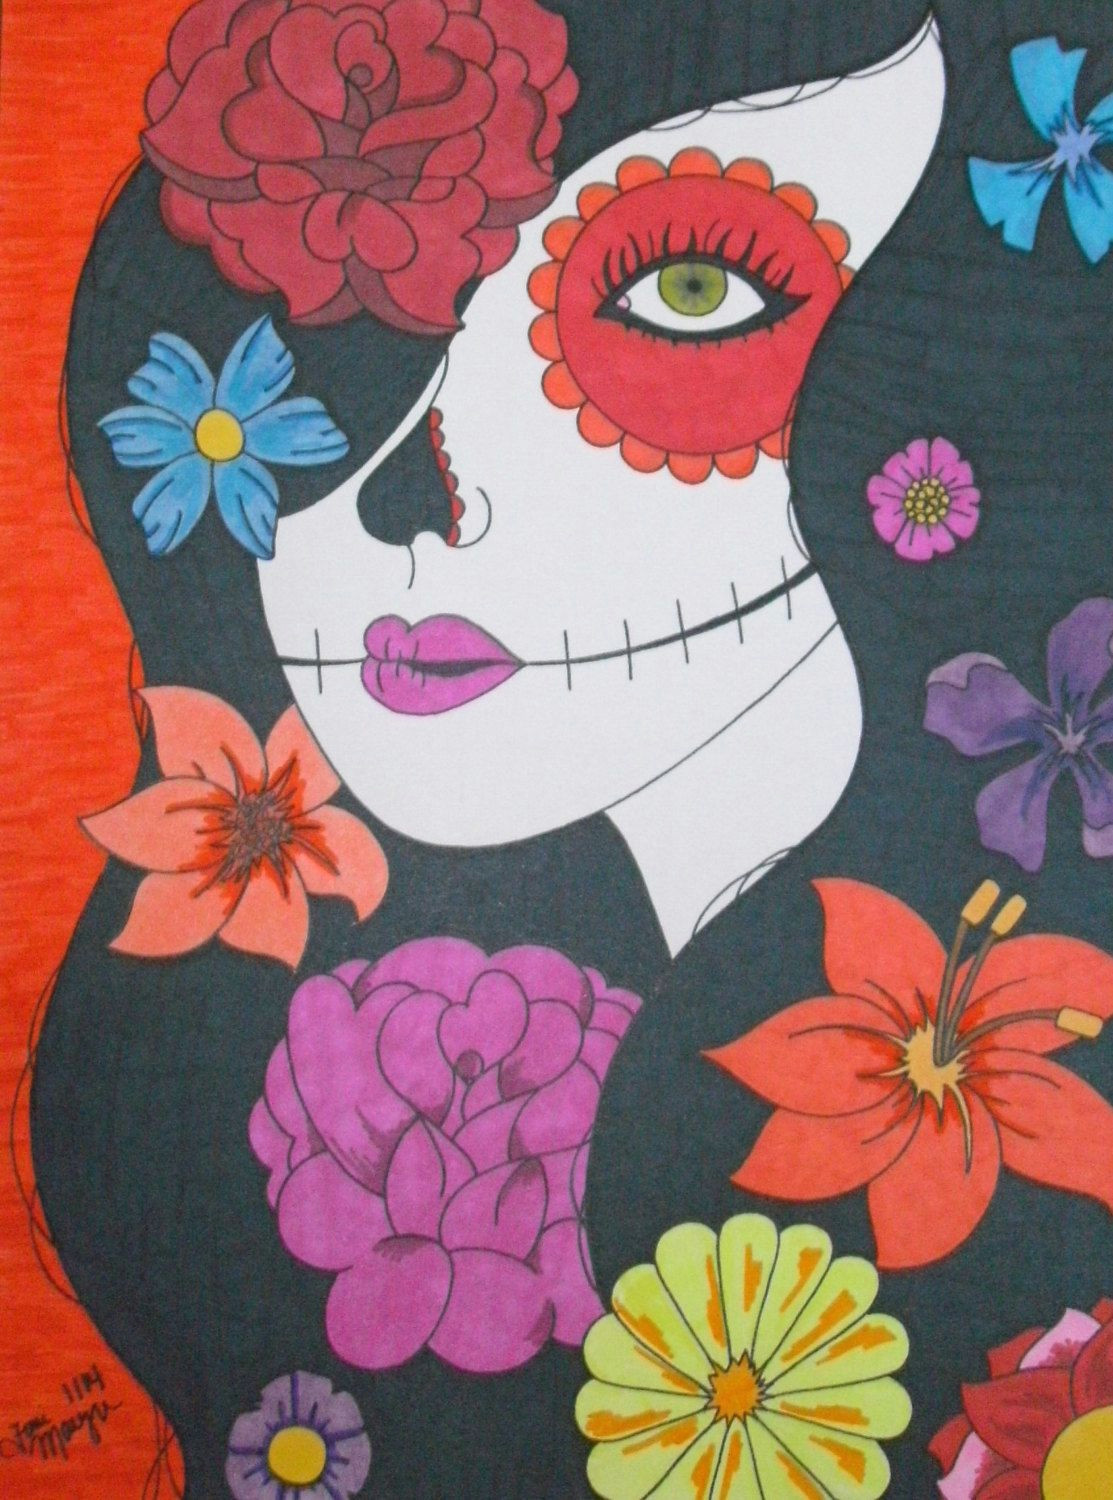 sugar skull girl flowers drawing 9x12 inch drawing day of the dead art sugar skull drawing mexican inspired art calavera drawing